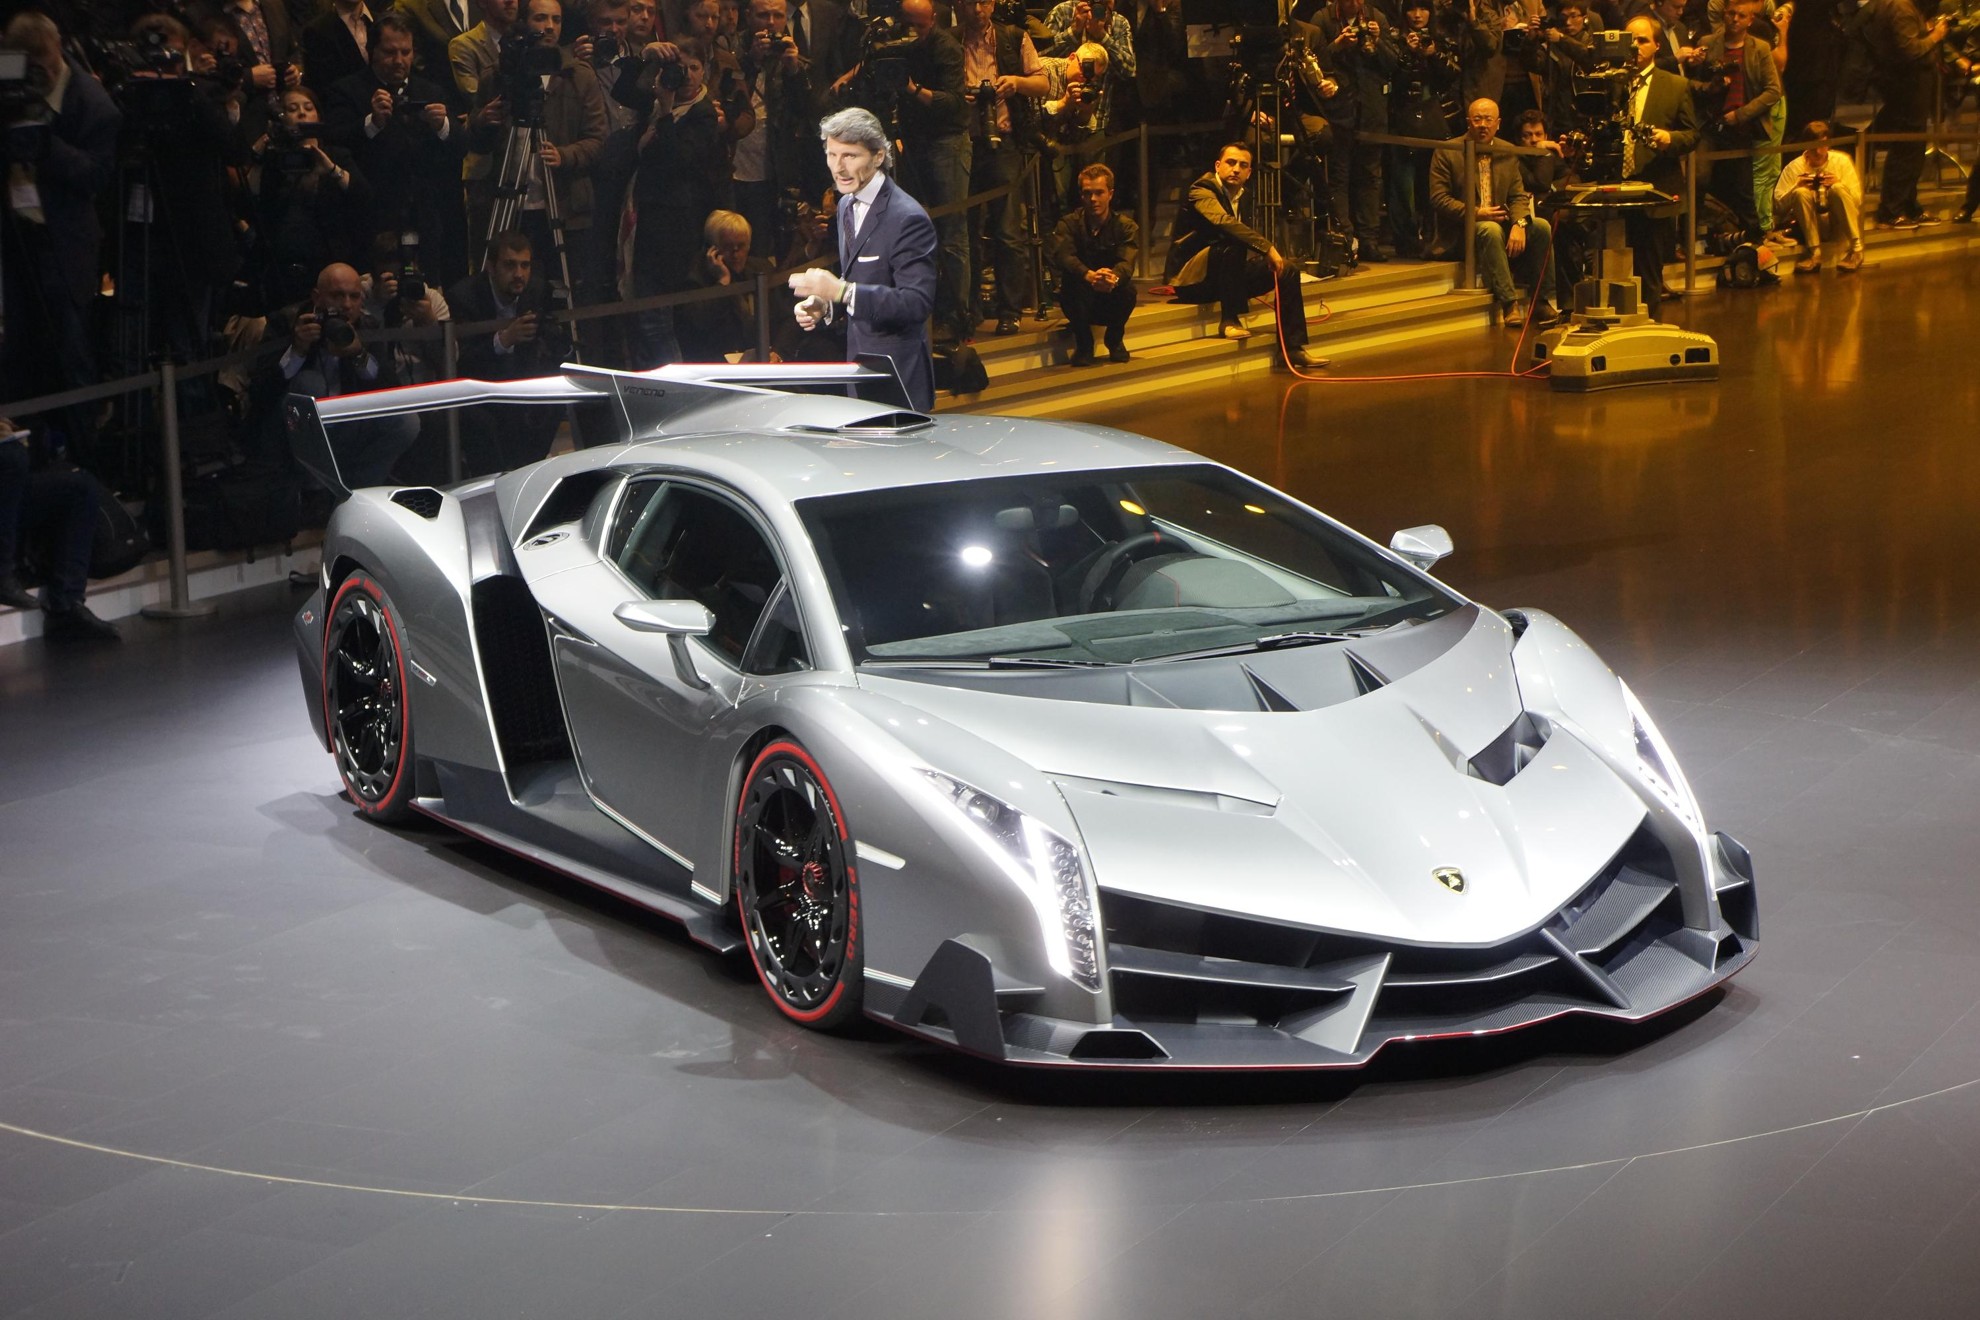 Automobili Lamborghini – 2012 full year figures